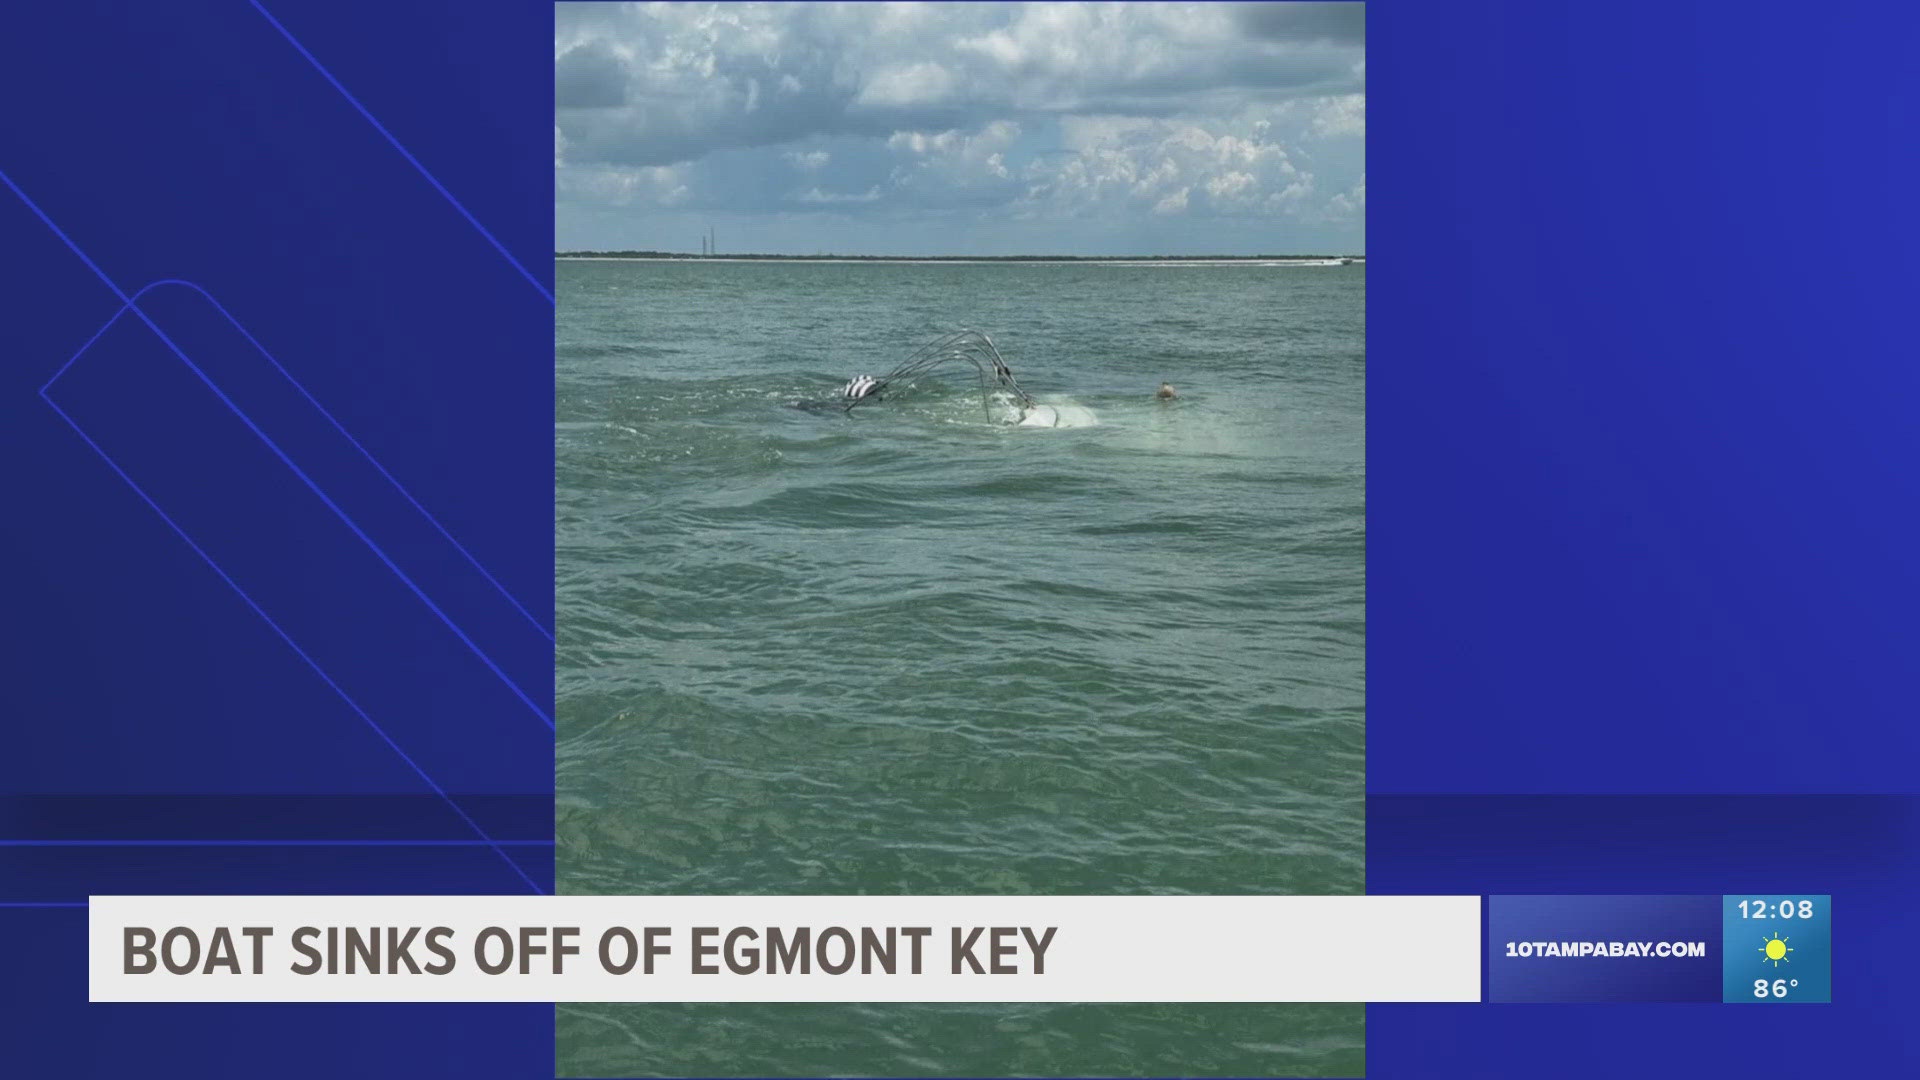 Their boat sank off Egmont Key on Saturday night.